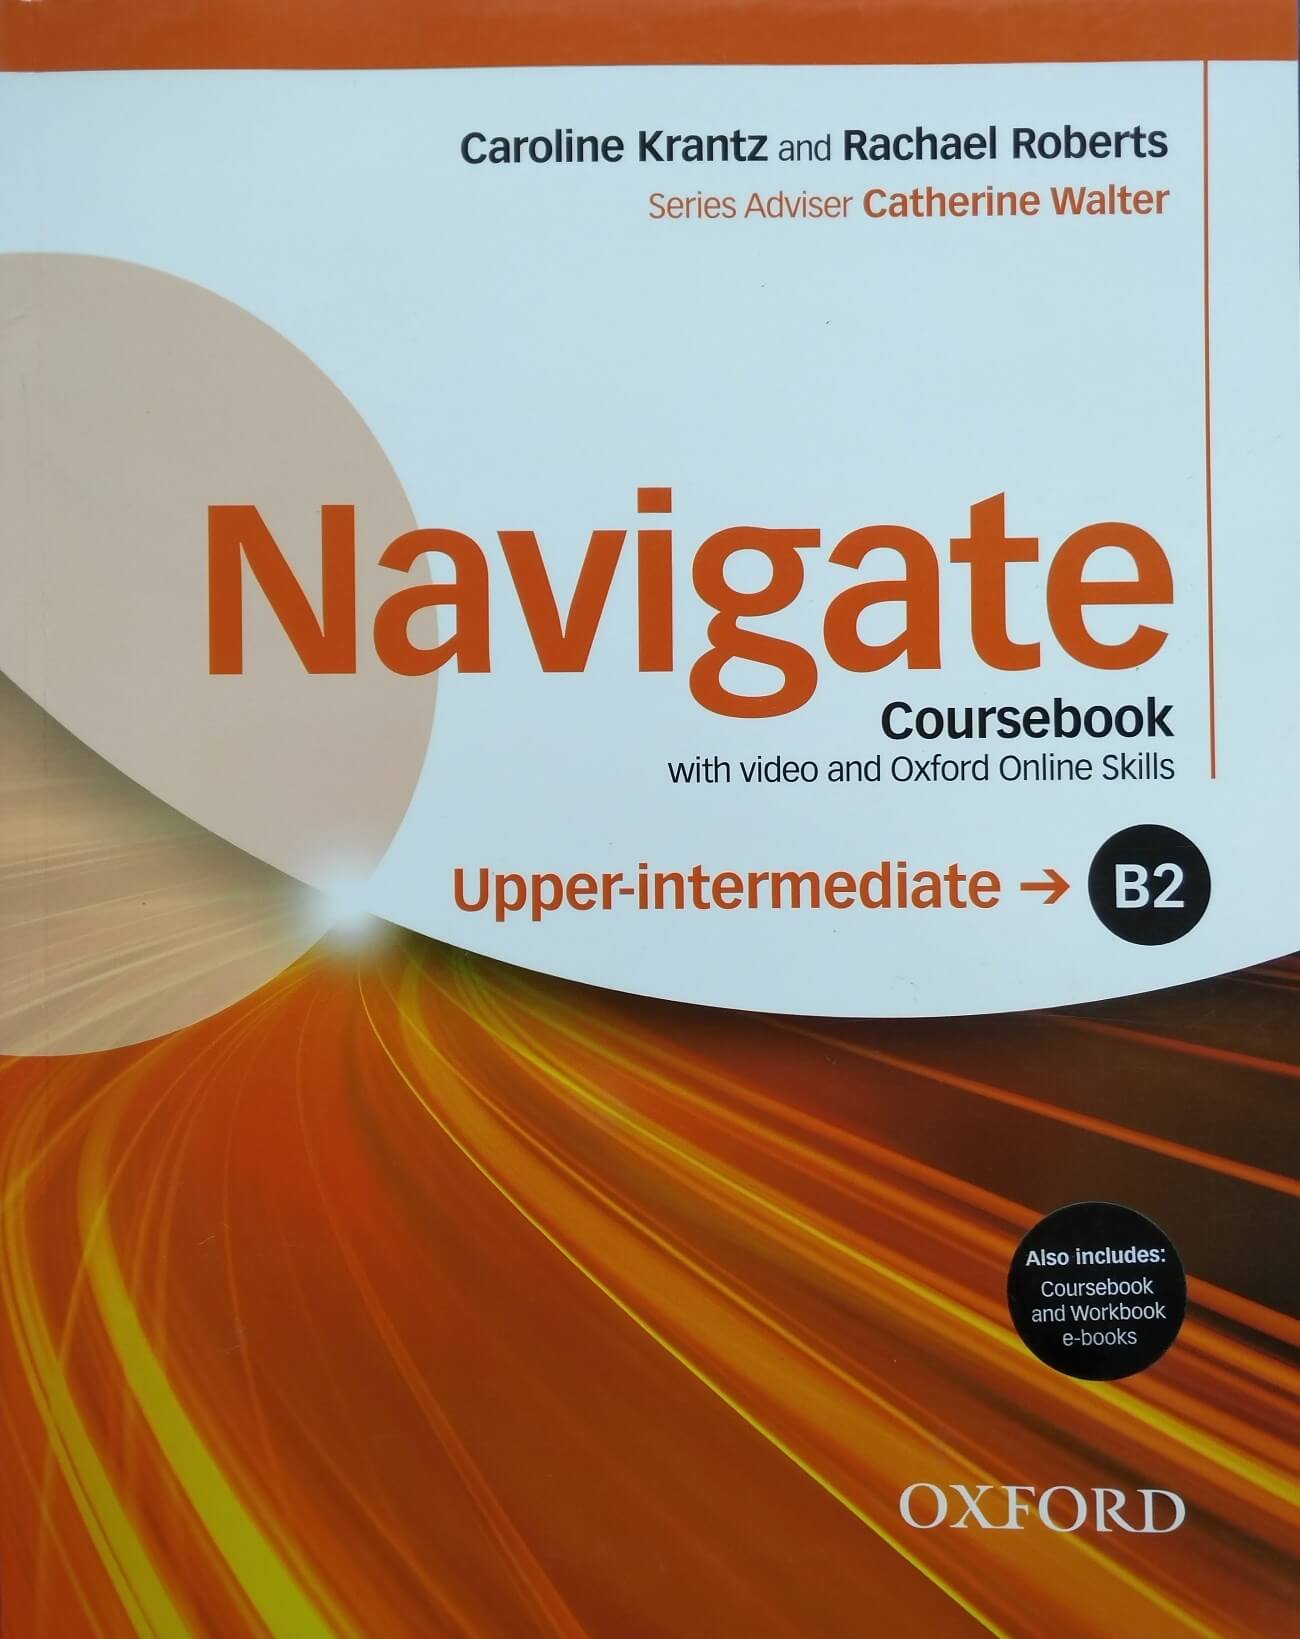 Oxford navigate Coursebook. Navigate a1 Coursebook. Oxford navigate b2 Intermediate. Navigate a2 Coursebook шпаргалка. Navigate elementary